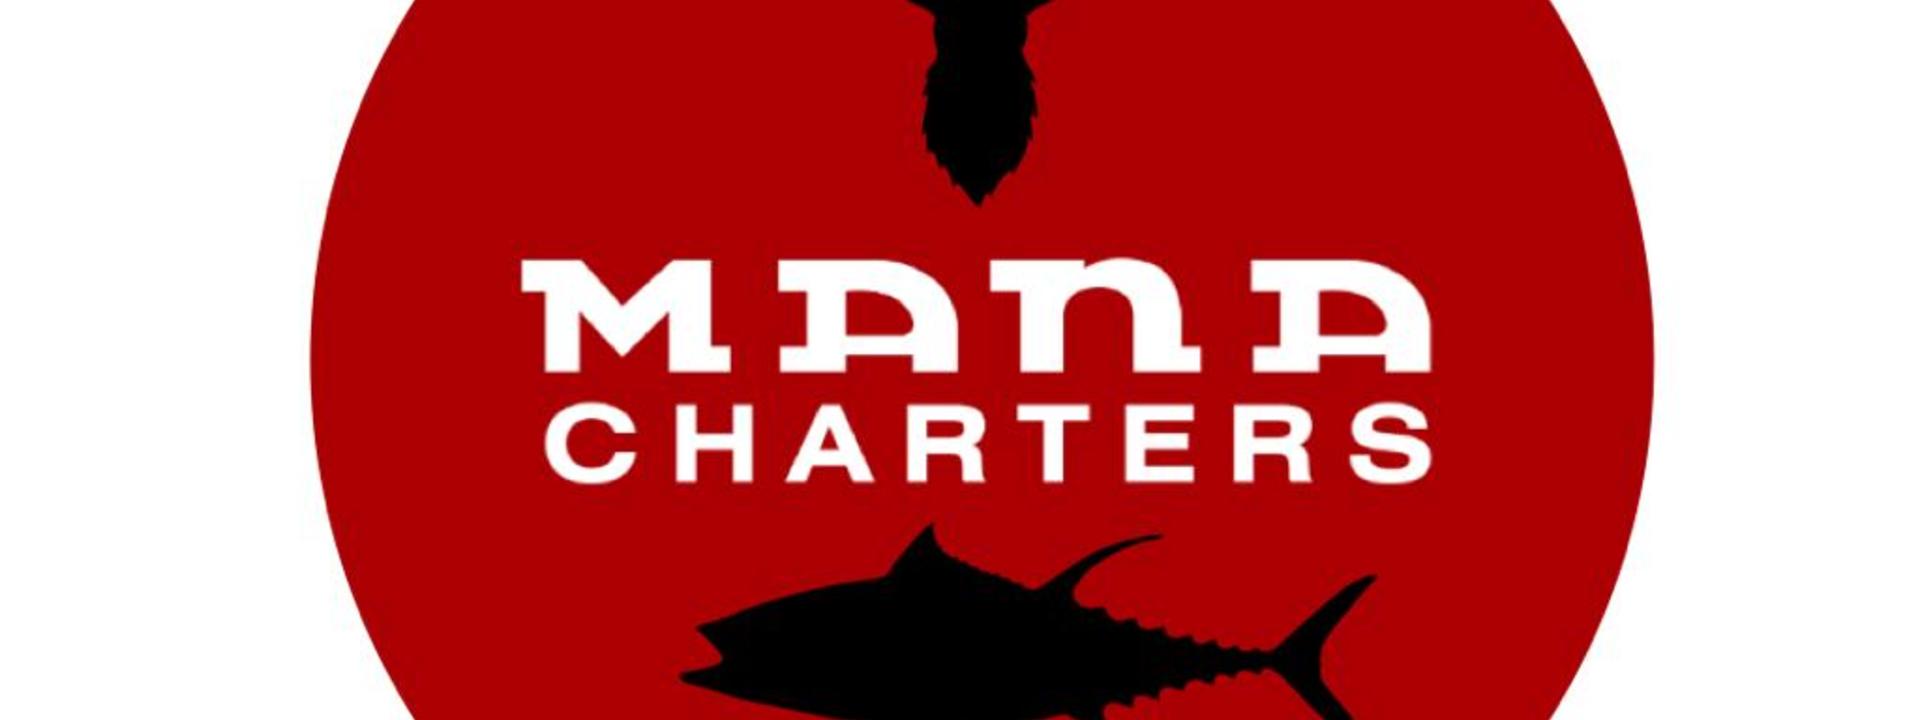 mana-charters-logo_0.jpg